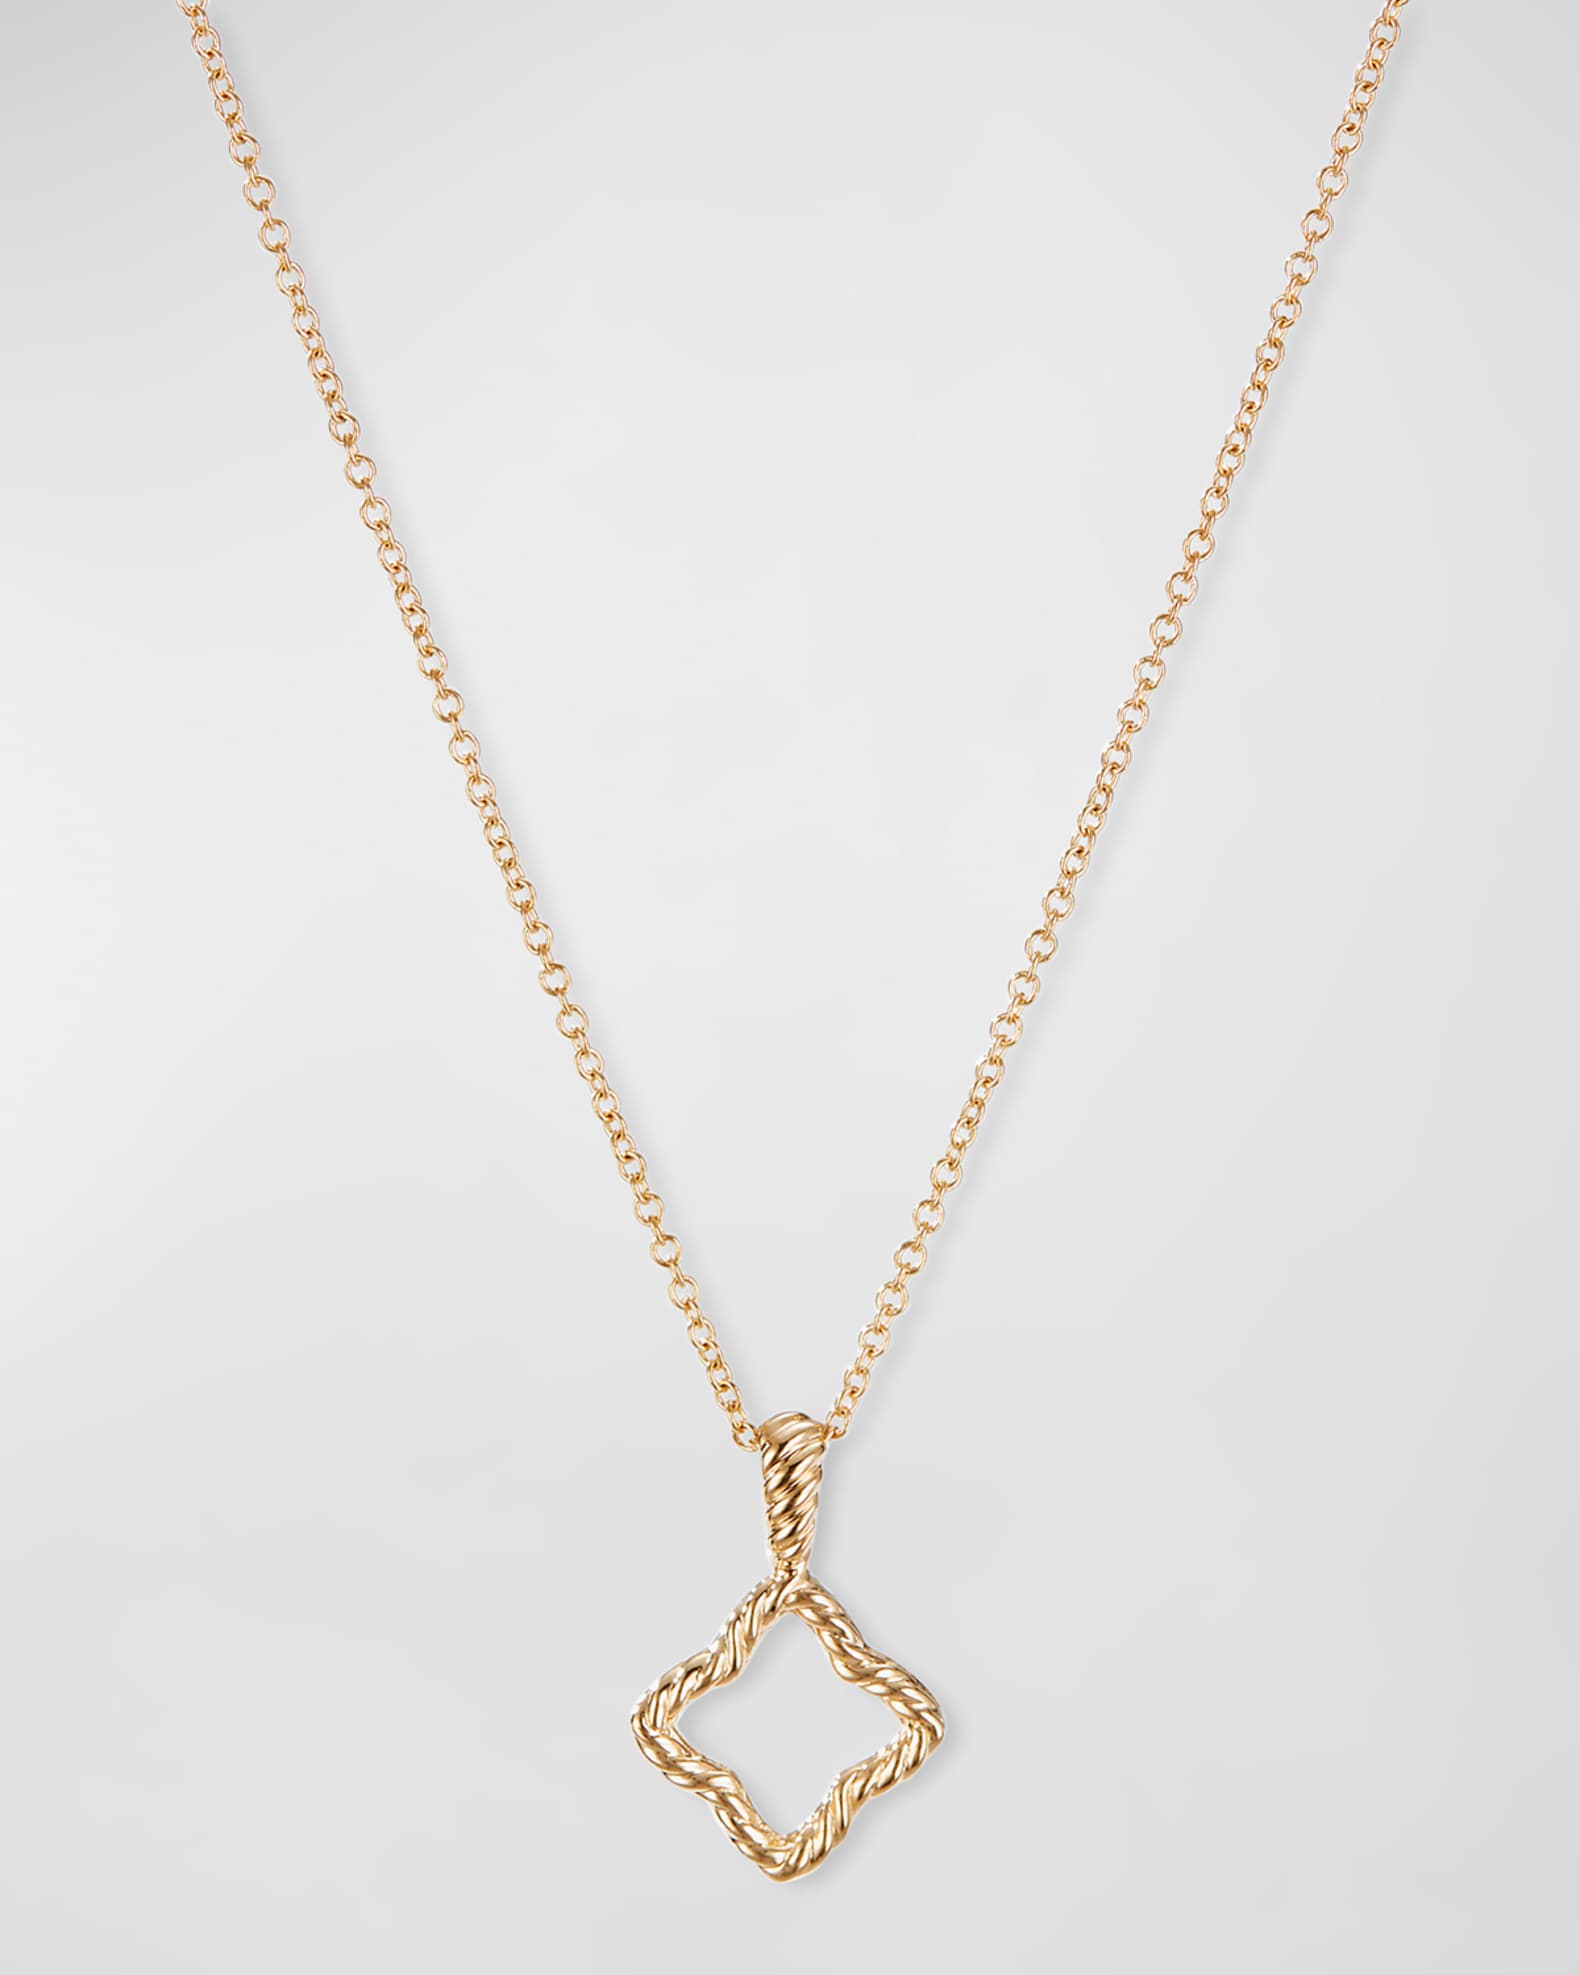 Louis Vuitton Heart & Bow Locket 18k Yellow Gold Charm Pendant